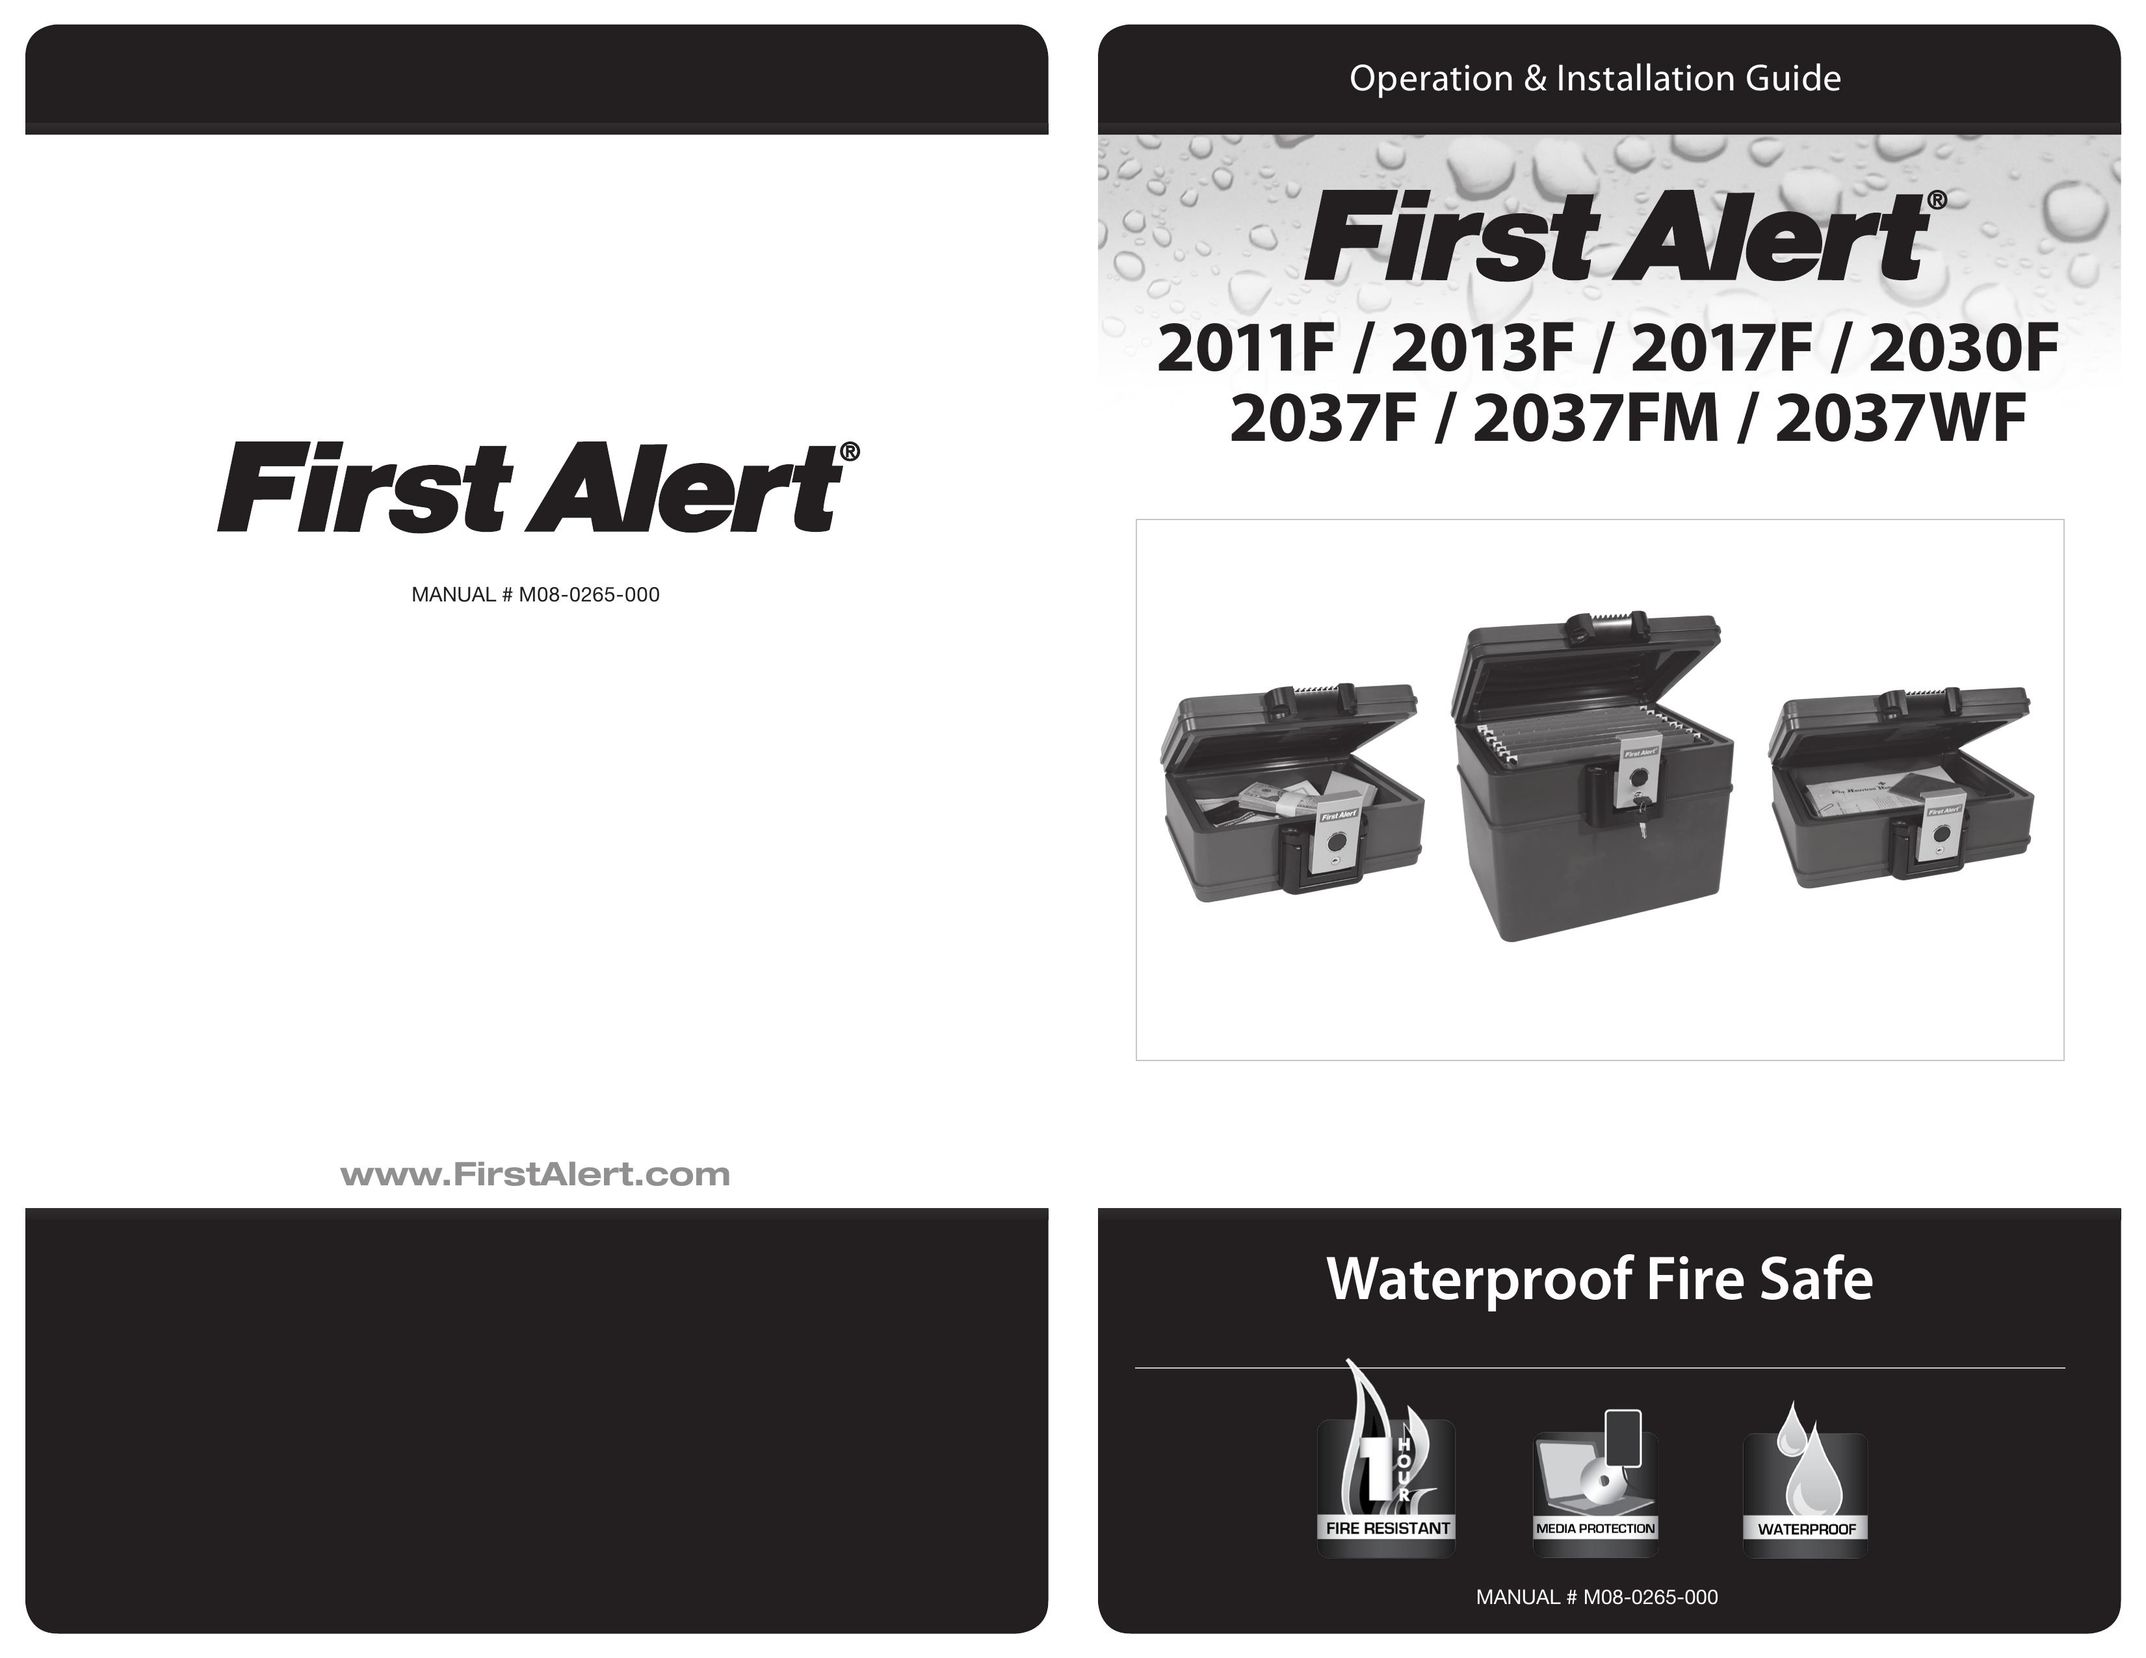 First Alert 2037WF Portable Media Storage User Manual